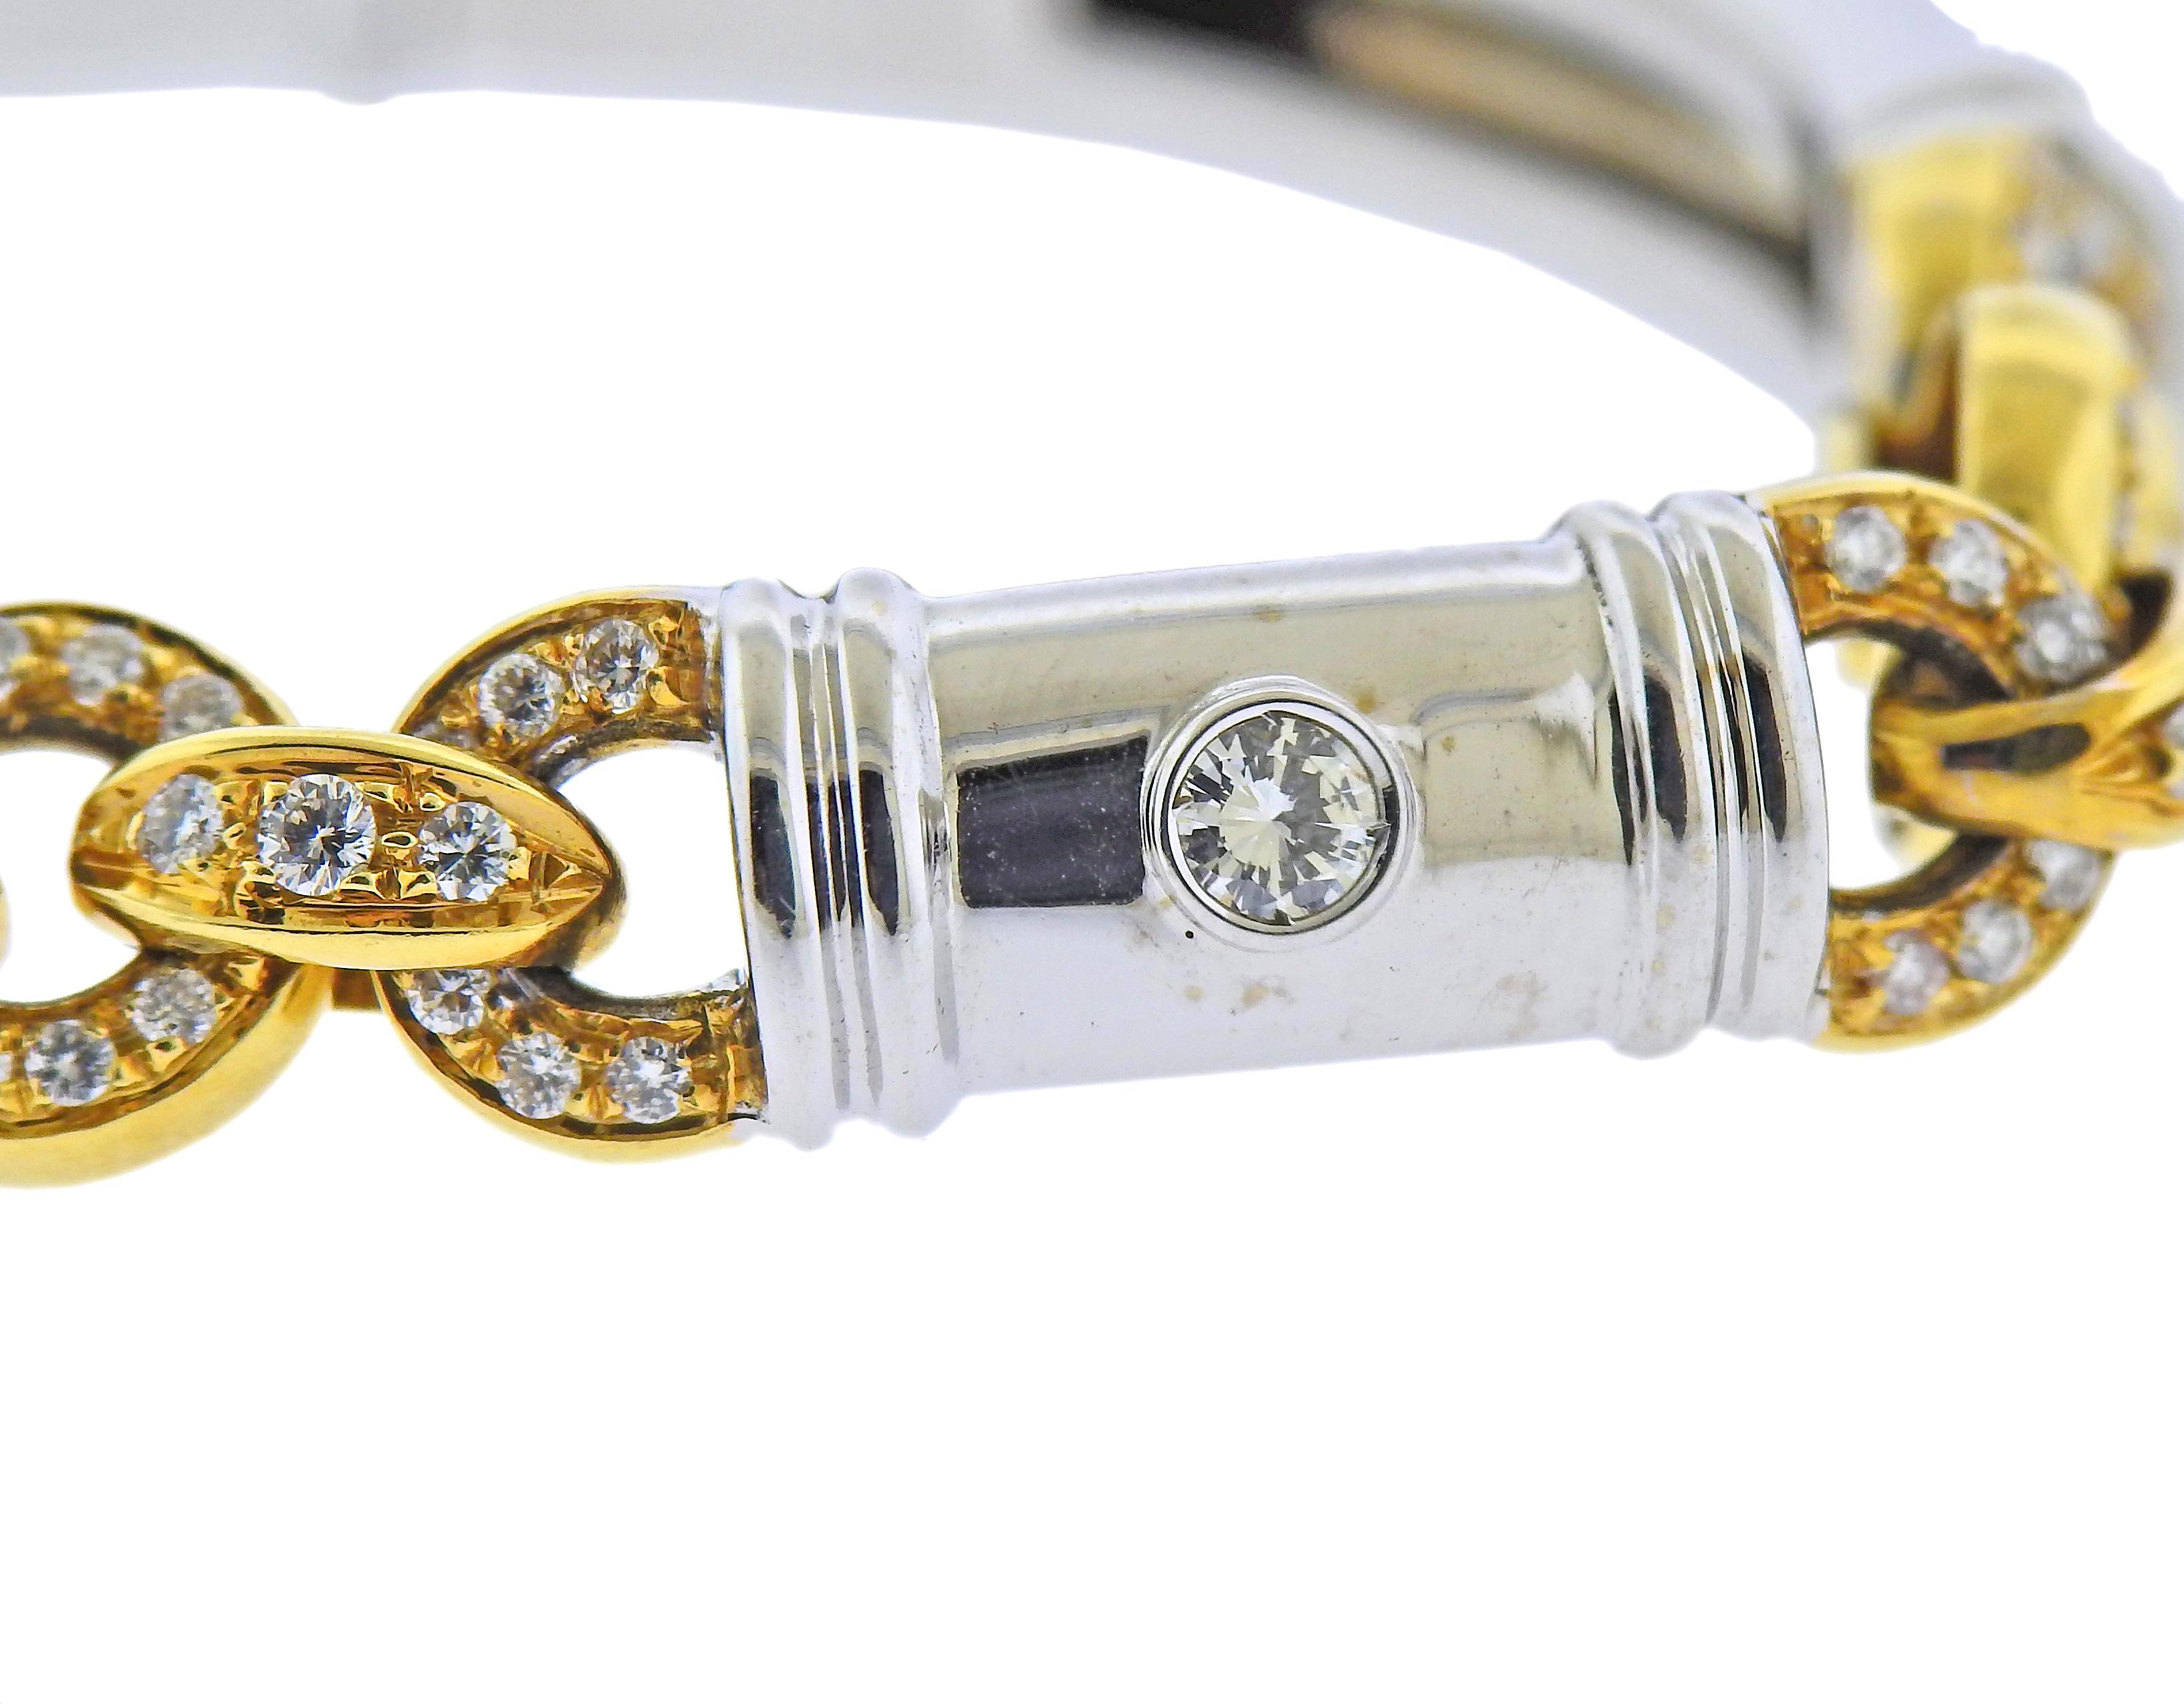 18k two tone gold bracelet, with approx. 1.10ctw in diamonds. Bracelet is 6.75